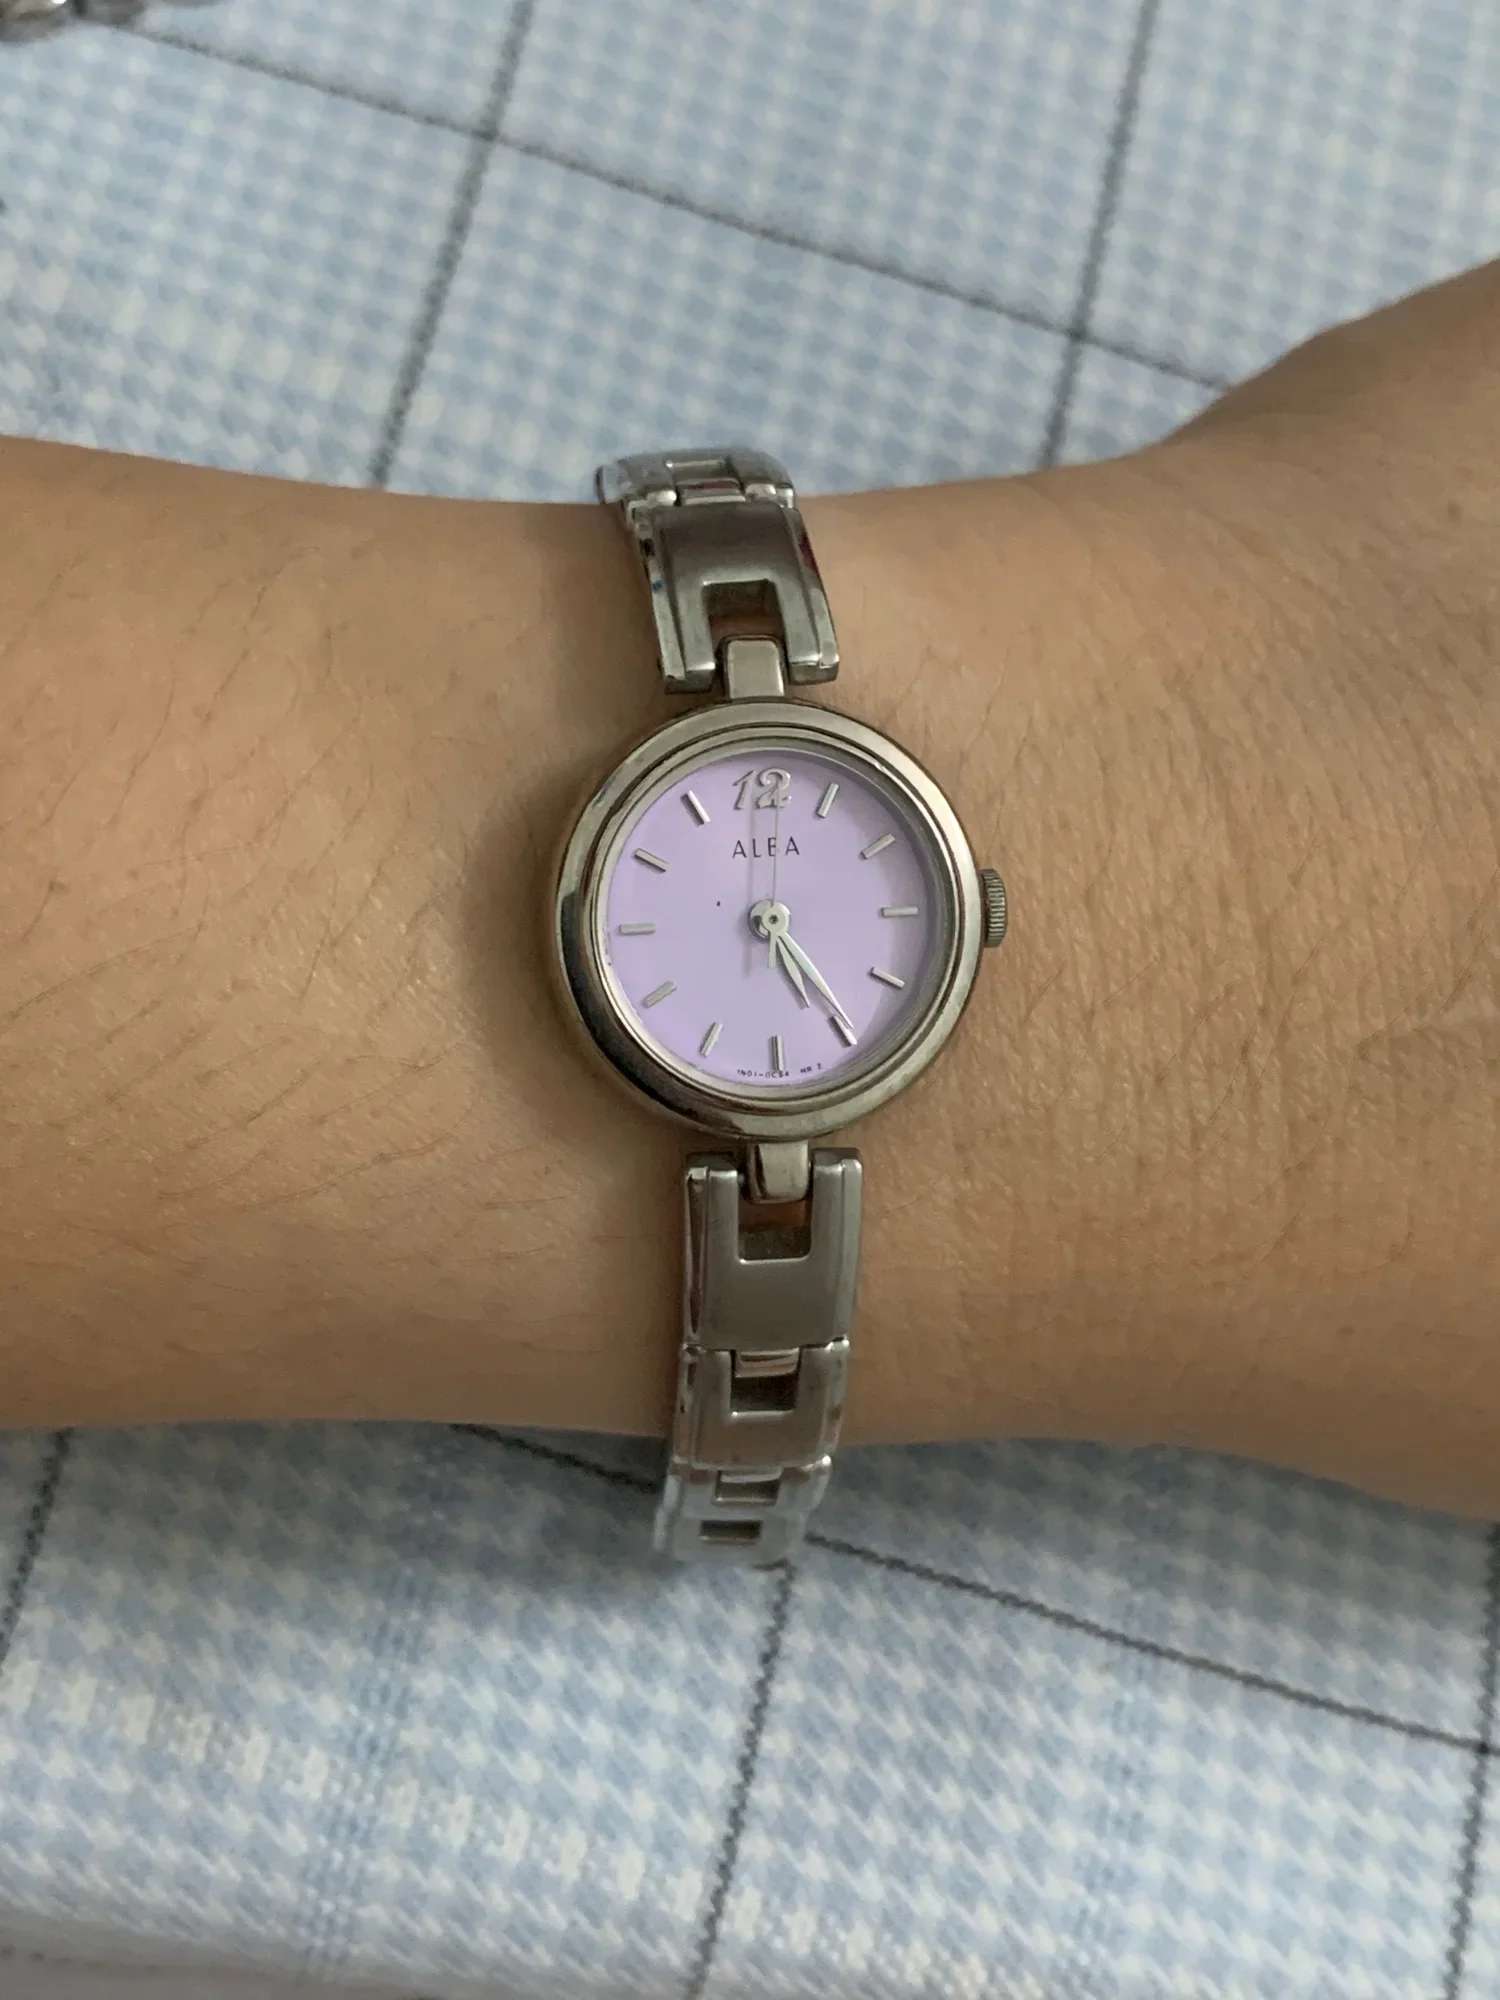 [HCM]Đồng hồ si nữ Alba